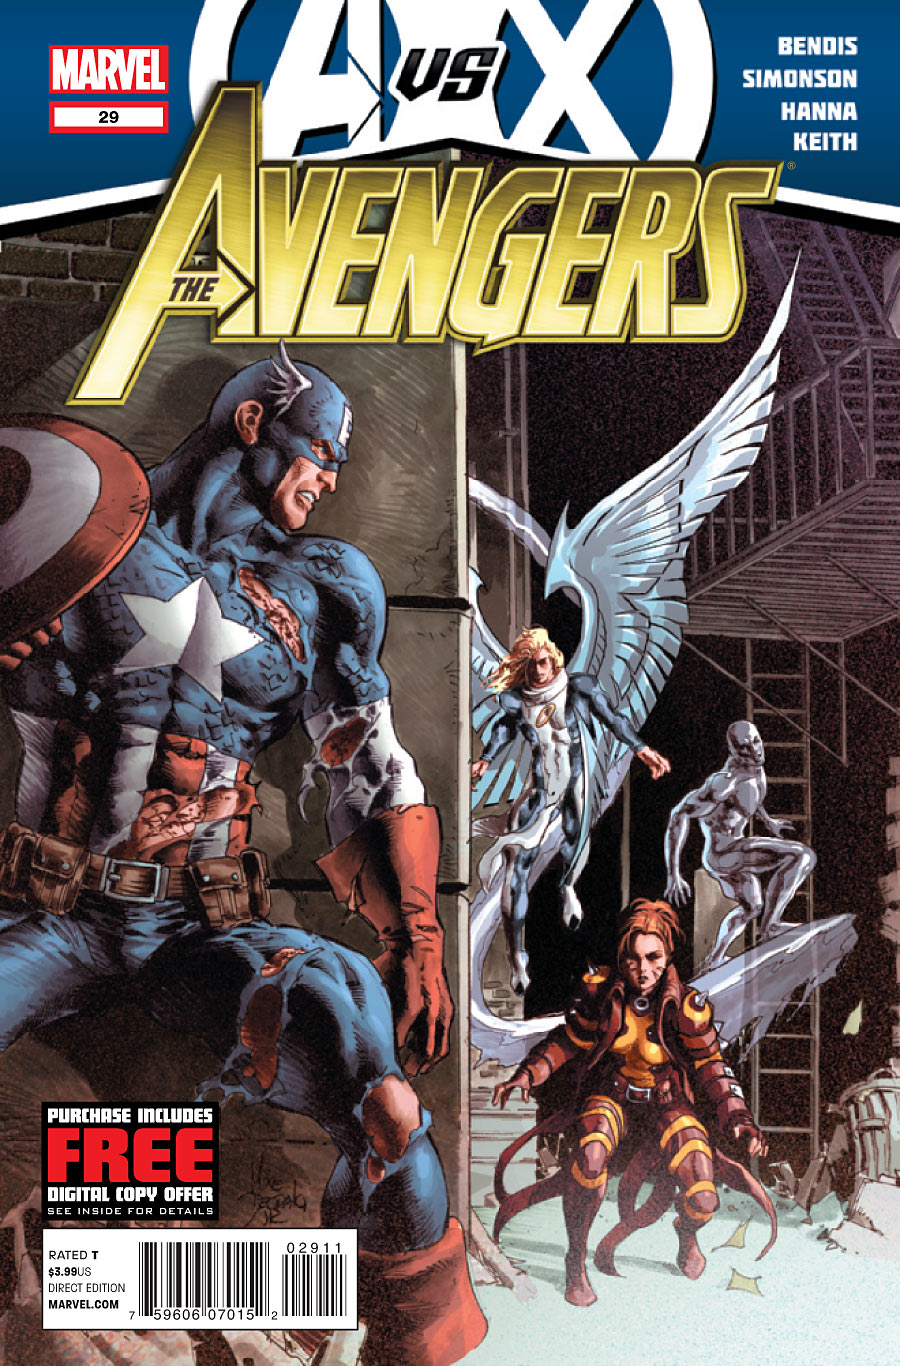 Cover for AvX Tie-In Avengers issue 29